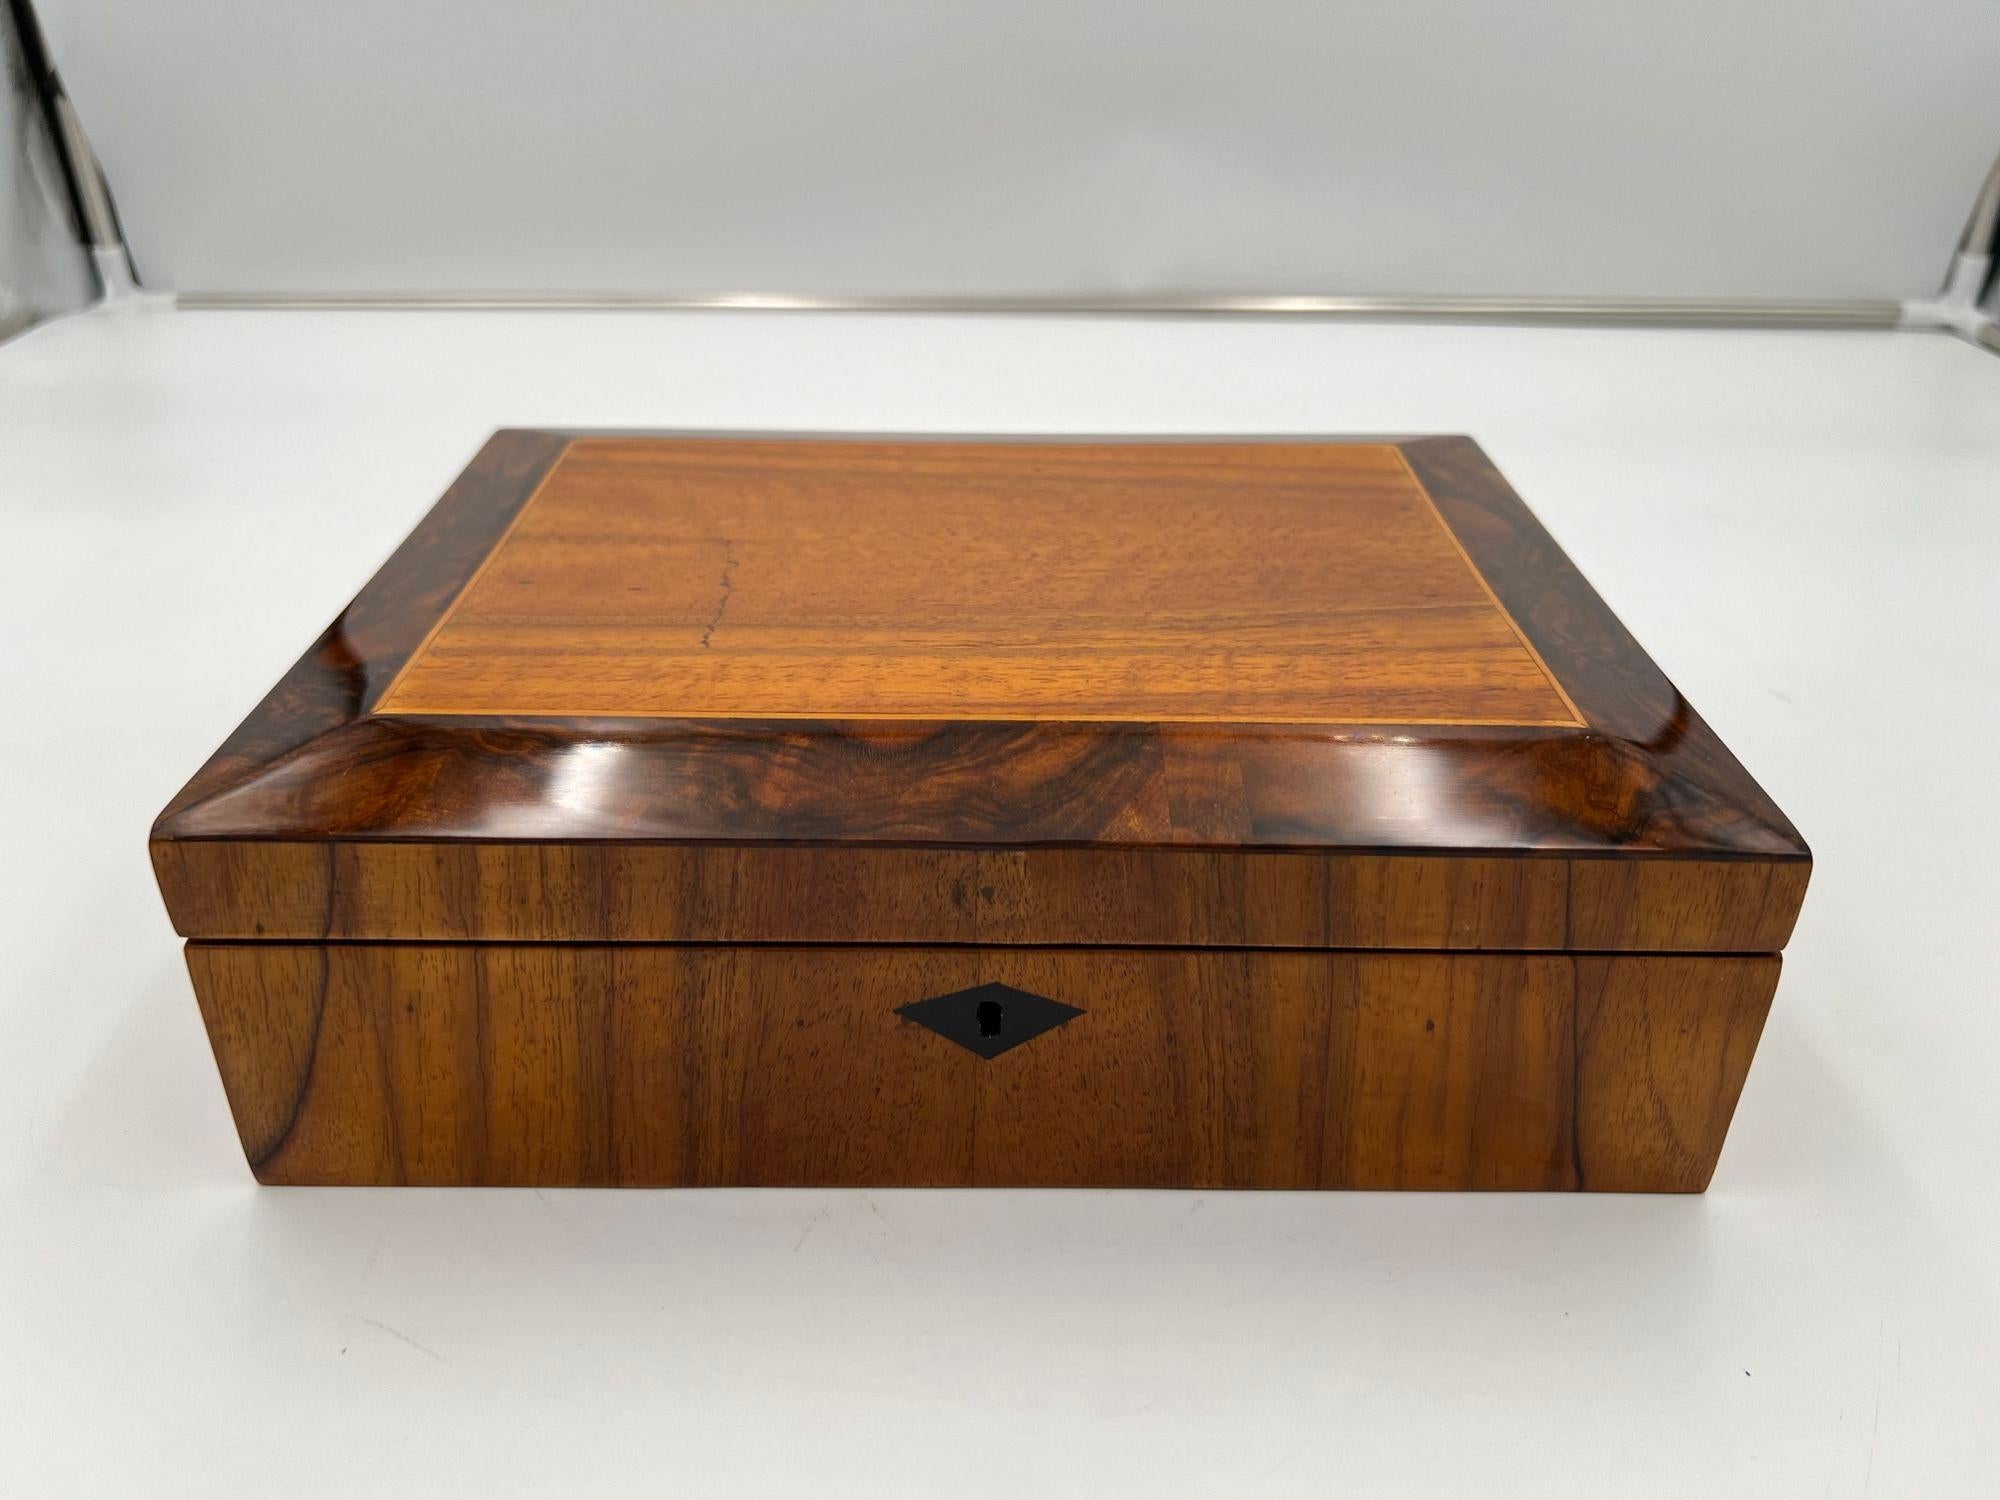 Biedermeier Box, Walnut, Maple, Austria circa 1820.
Walnut veneer with Maple inlays.
Ebonized key crest. Restored and hand polished with shellac.
Dimensions: H 9 cm x 28 cm x 21,5 cm